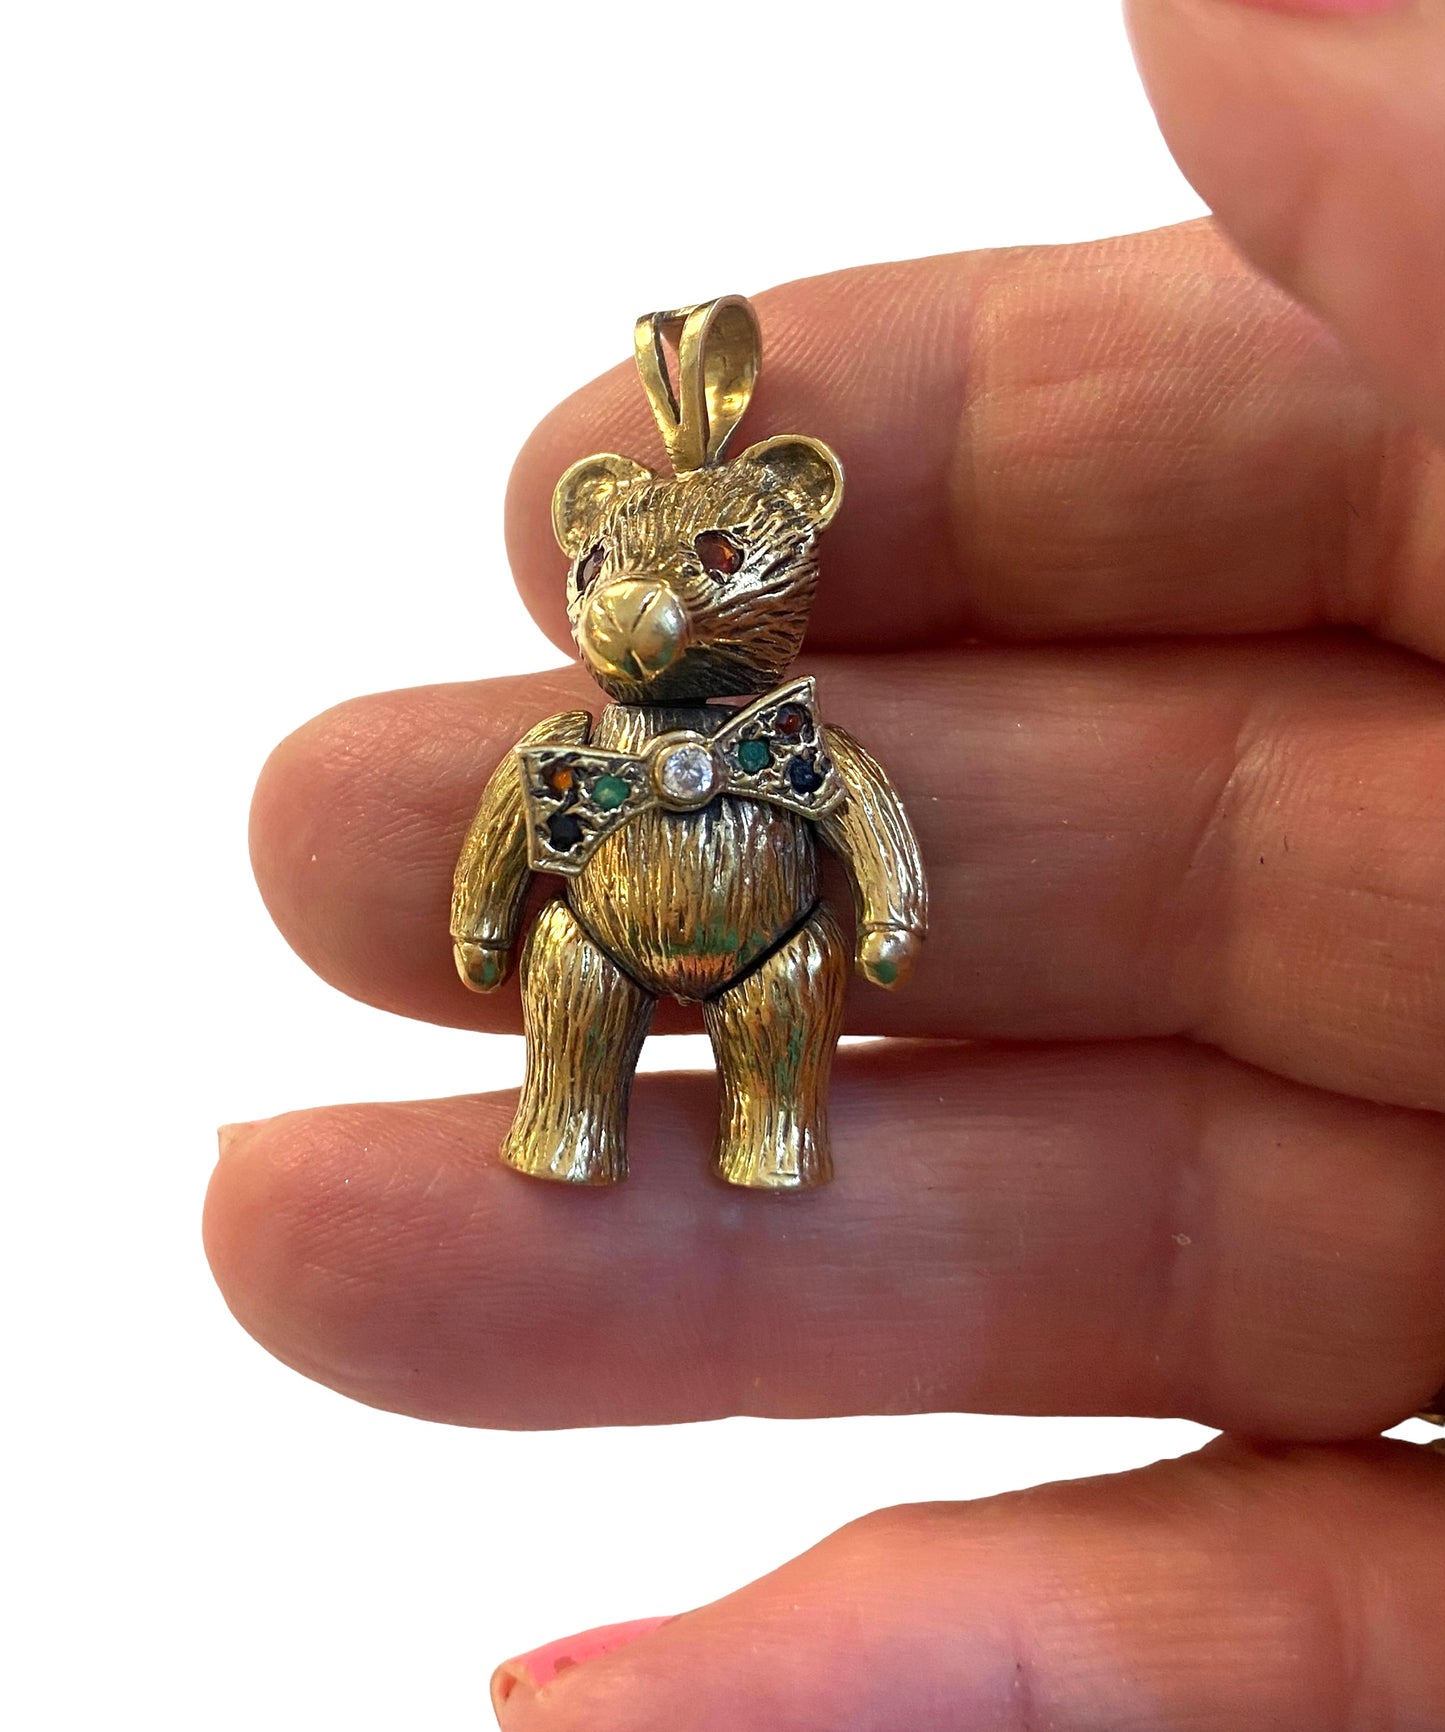 9ct vintage articulated teddy bear charm / pendant